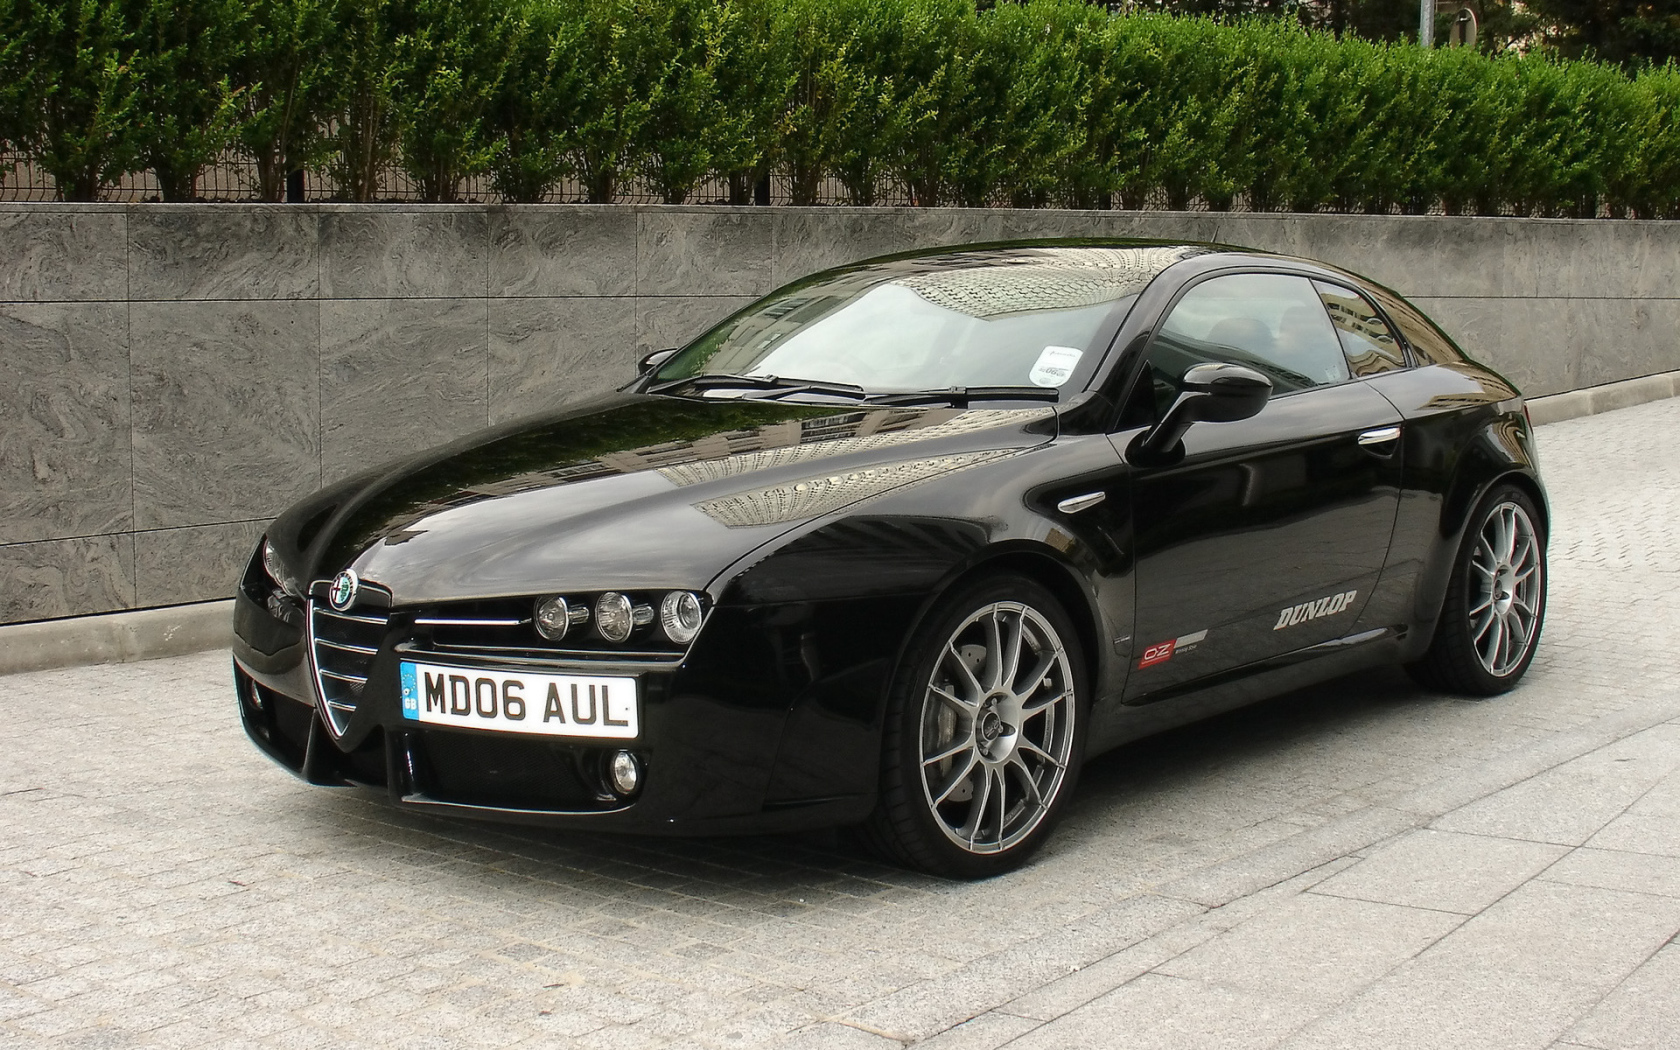 Автомобиль марки Alfa Romeo модели brera